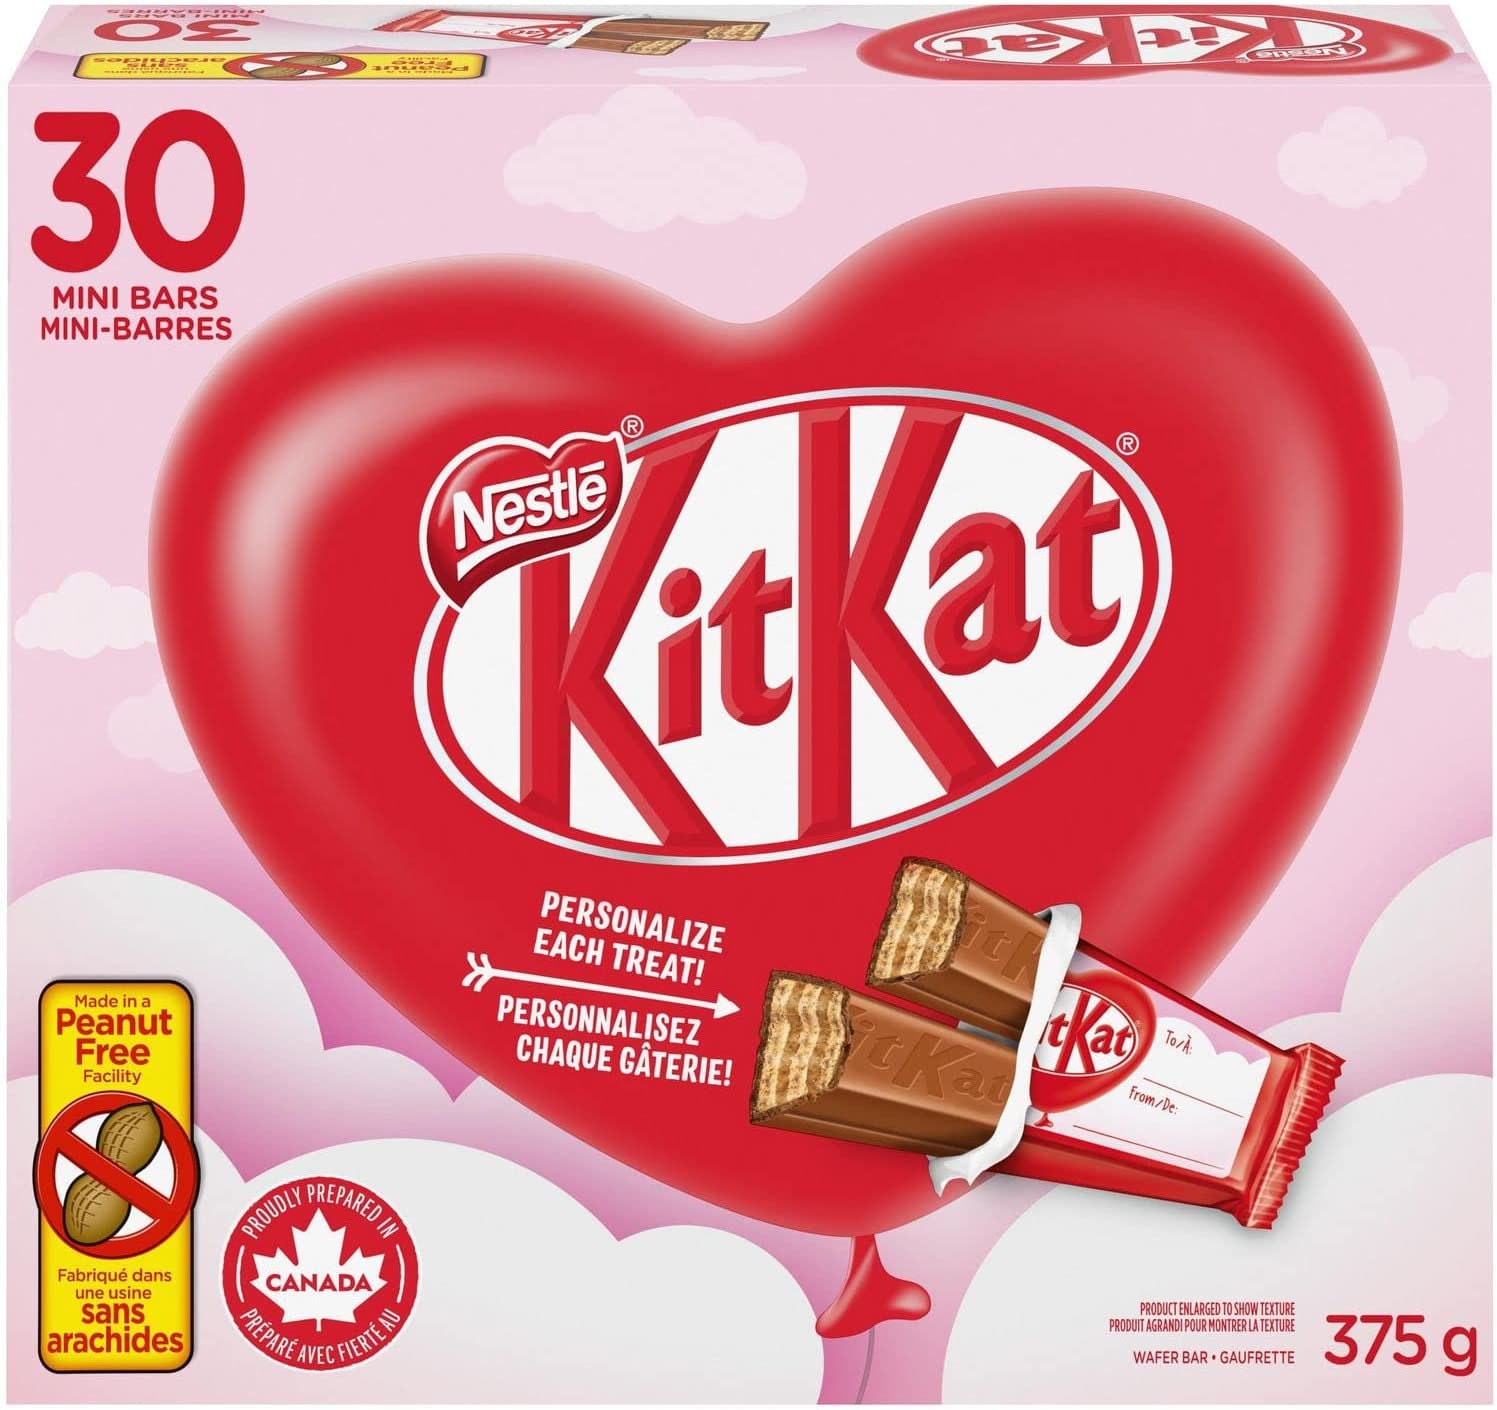 Kro kontoførende slot Nestlé KITKAT Minis Valentine's Chocolate Bars 30 Count - Etsy